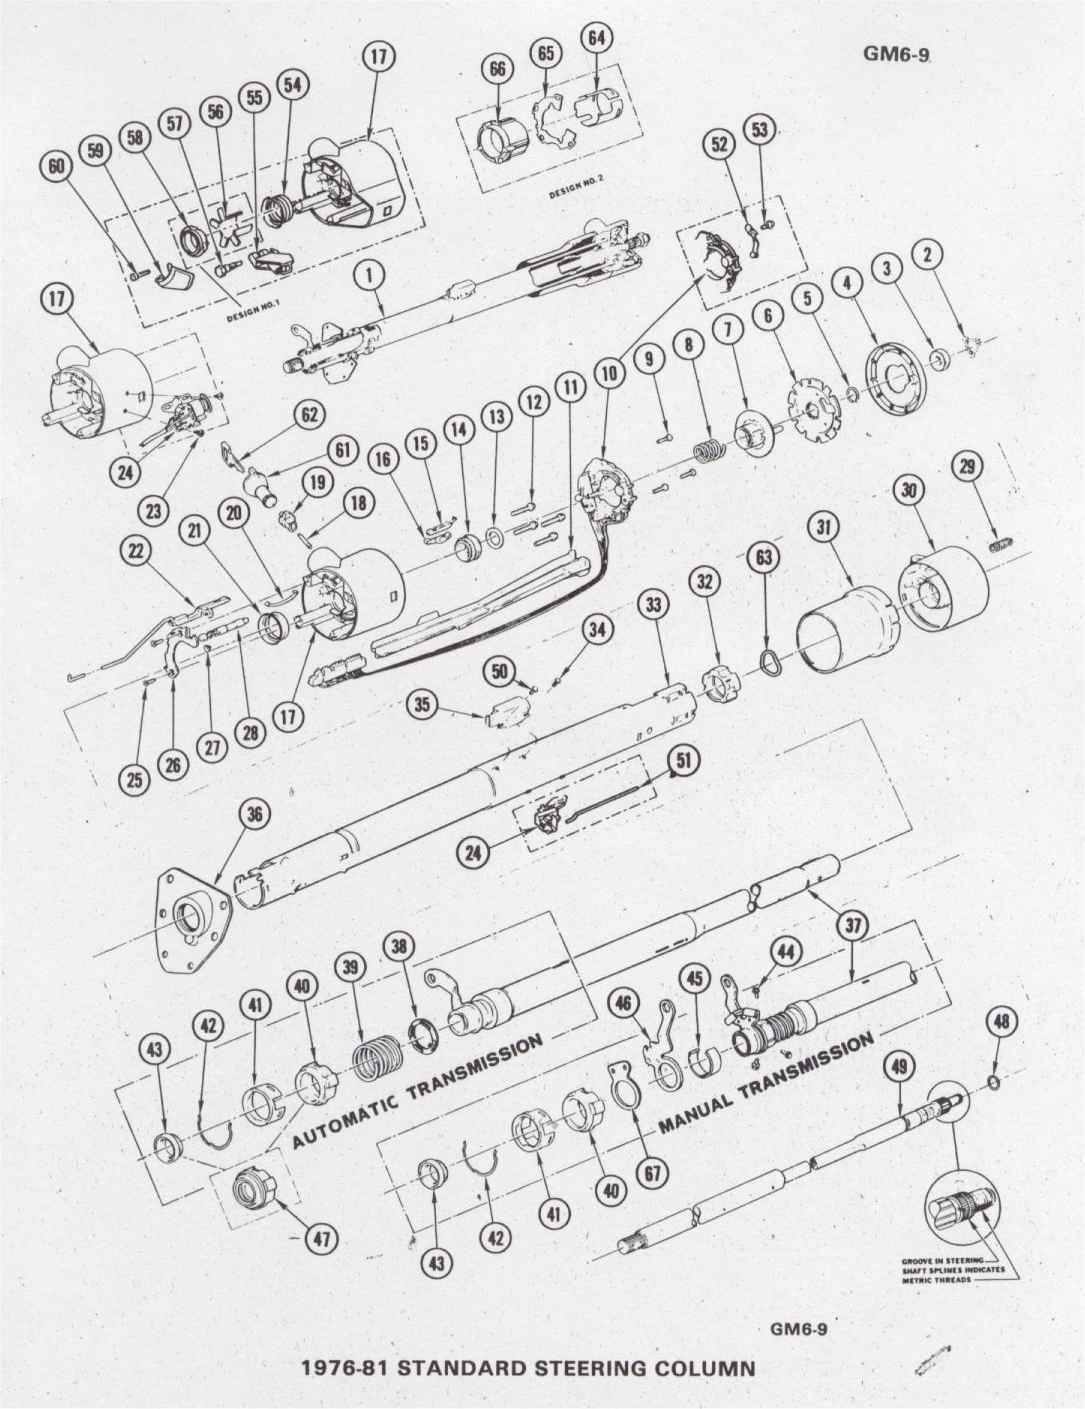 69 Camaro Drawing at GetDrawings | Free download 1969 nova ss wiring diagram further camaro console 